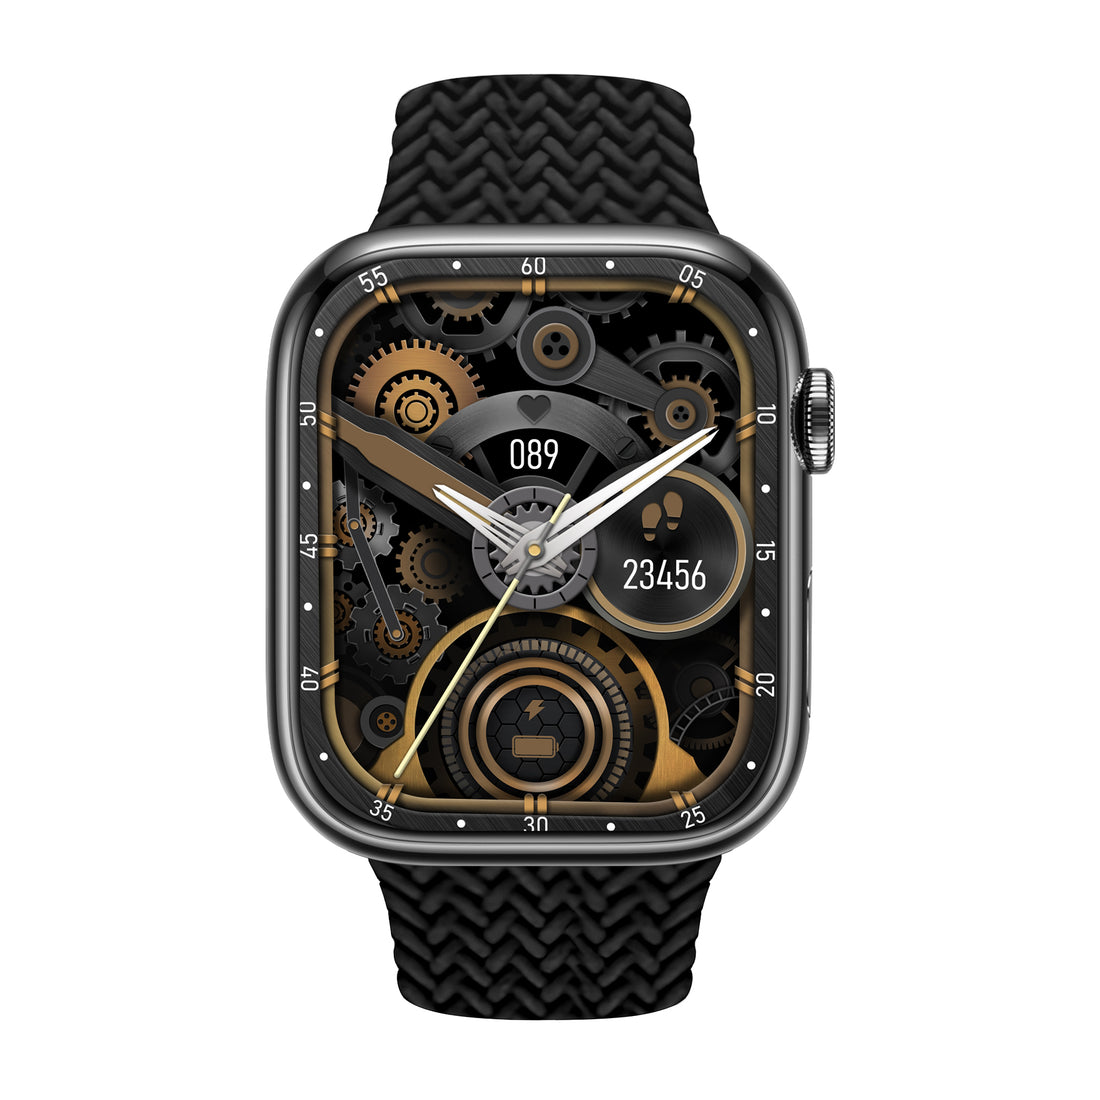 BlackZone PRO Touch Watch with New Smartwatch